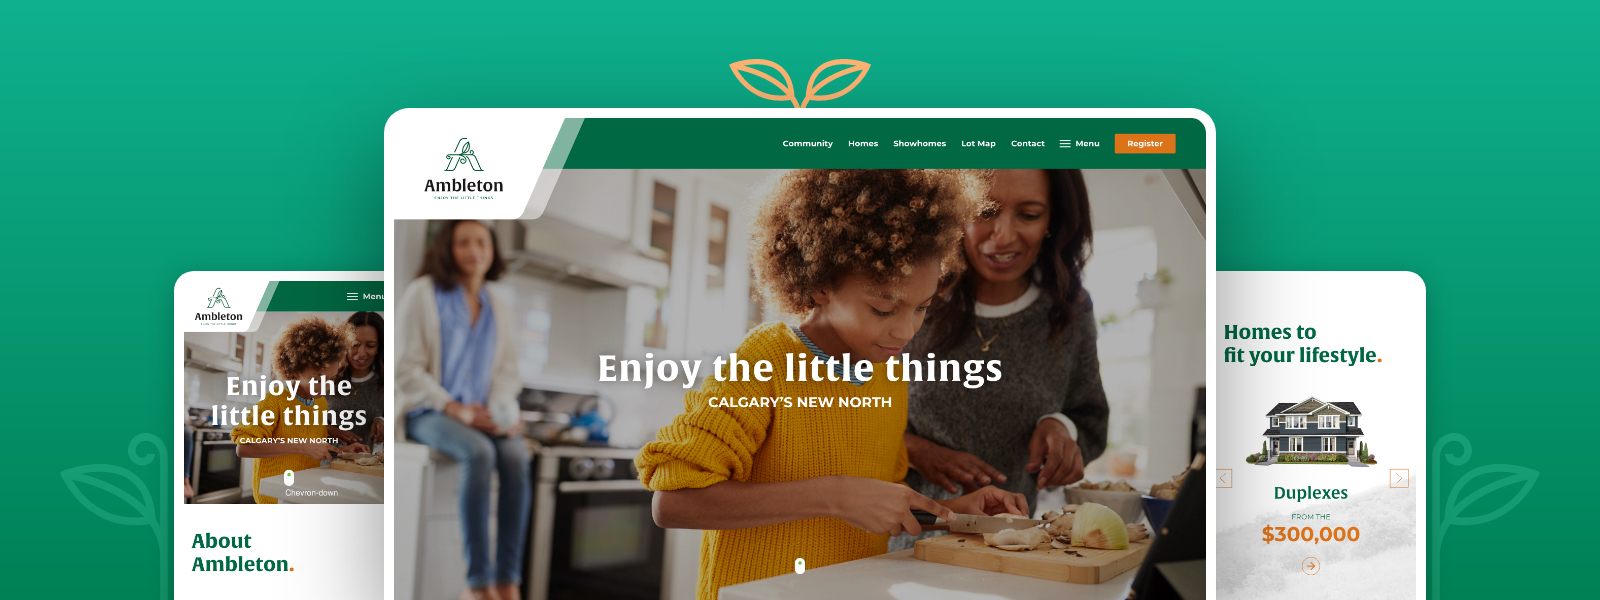 Ambleton community's branding and website design